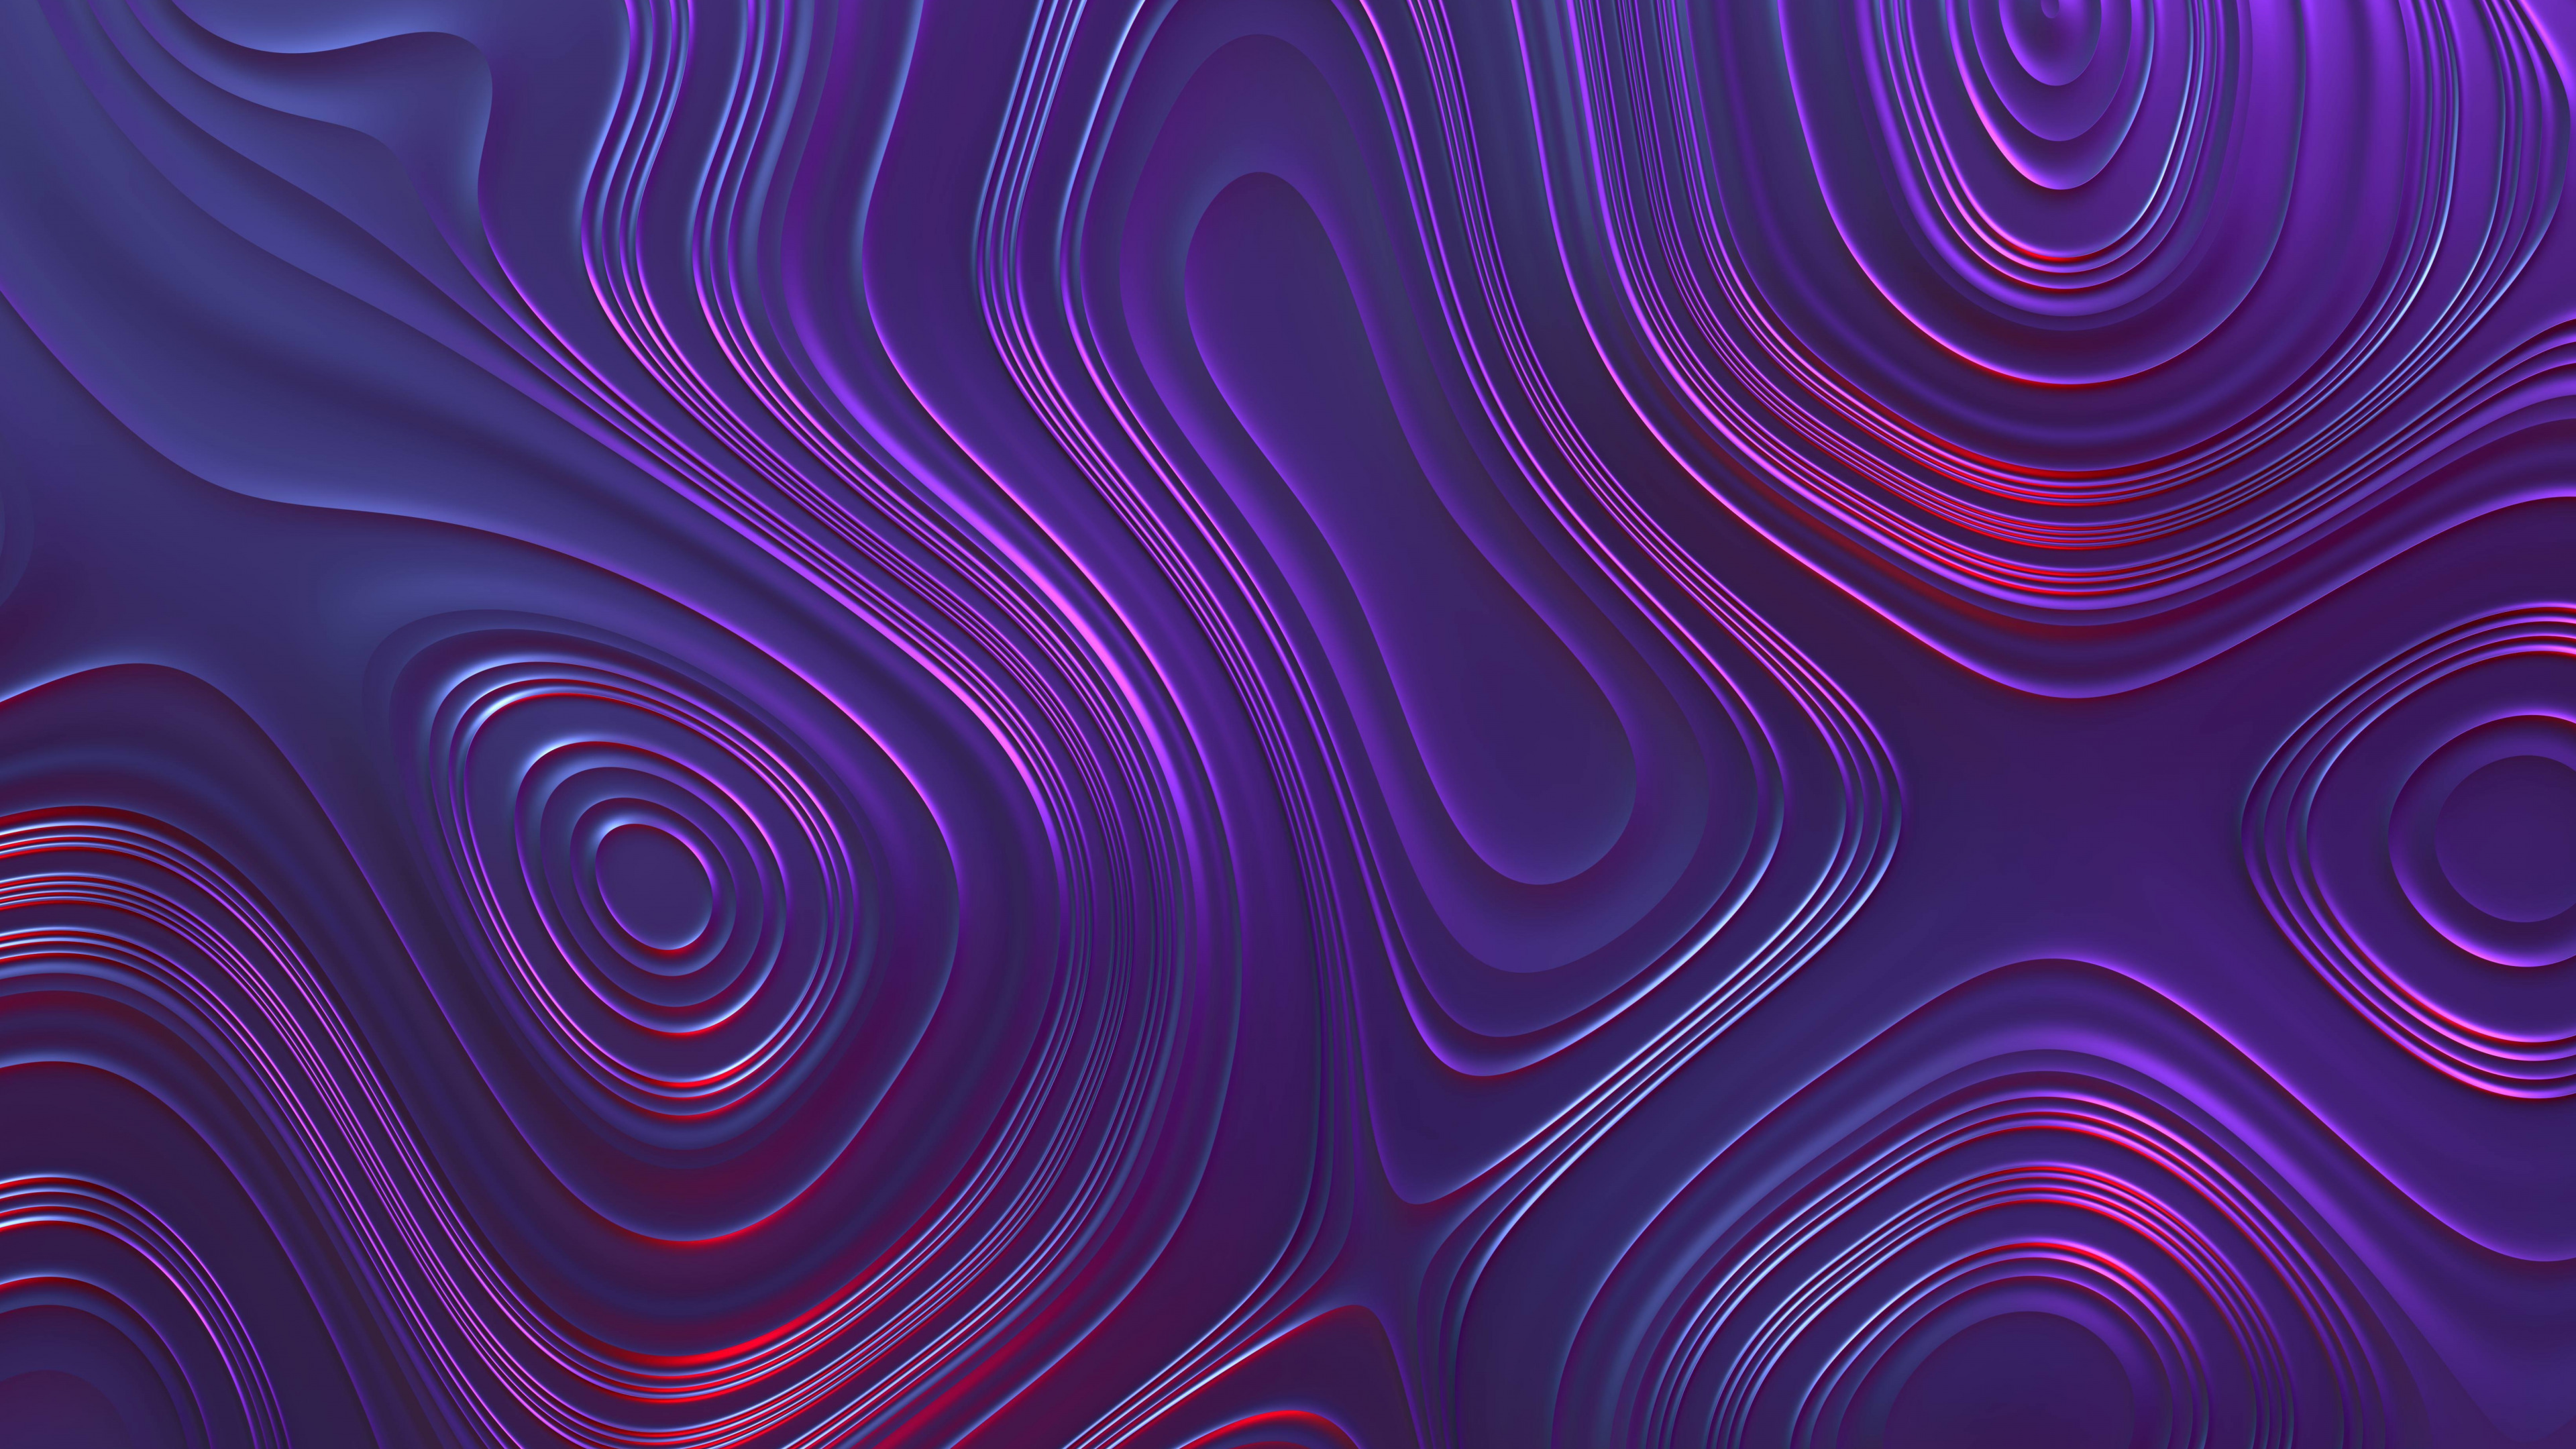 Abstract Wavy Lines Swirl Swirls Render Shapes Digital Art Purple 3840x2160